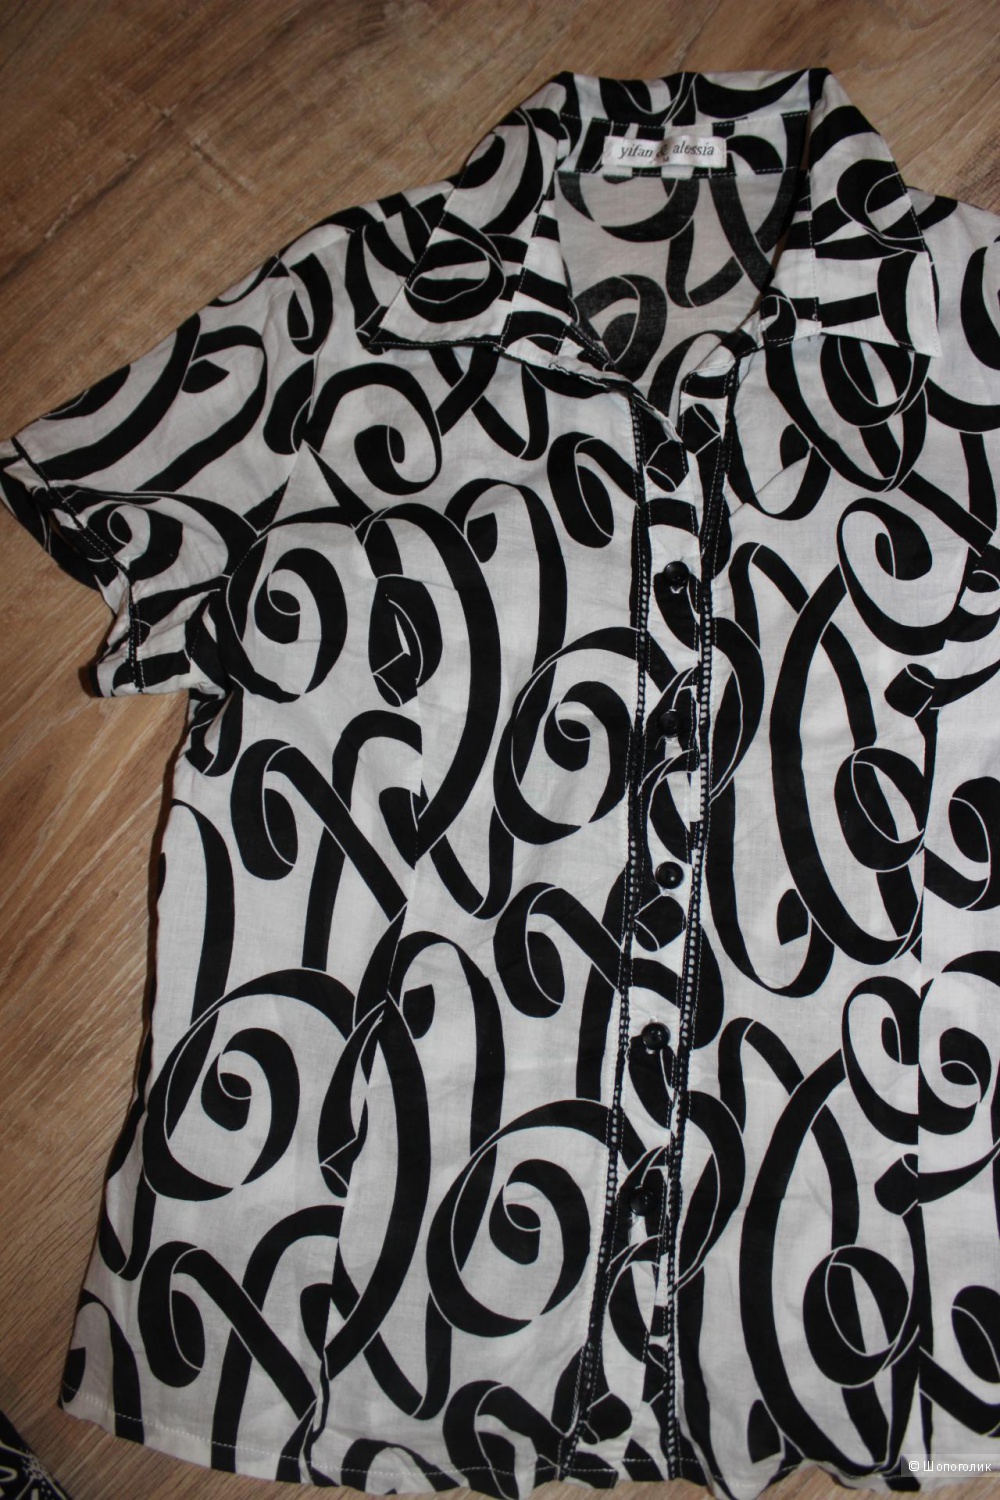 Комплект рубашка YIFAN & ALESSIA + юбка H&M, 100% хлопок, размер 44-46